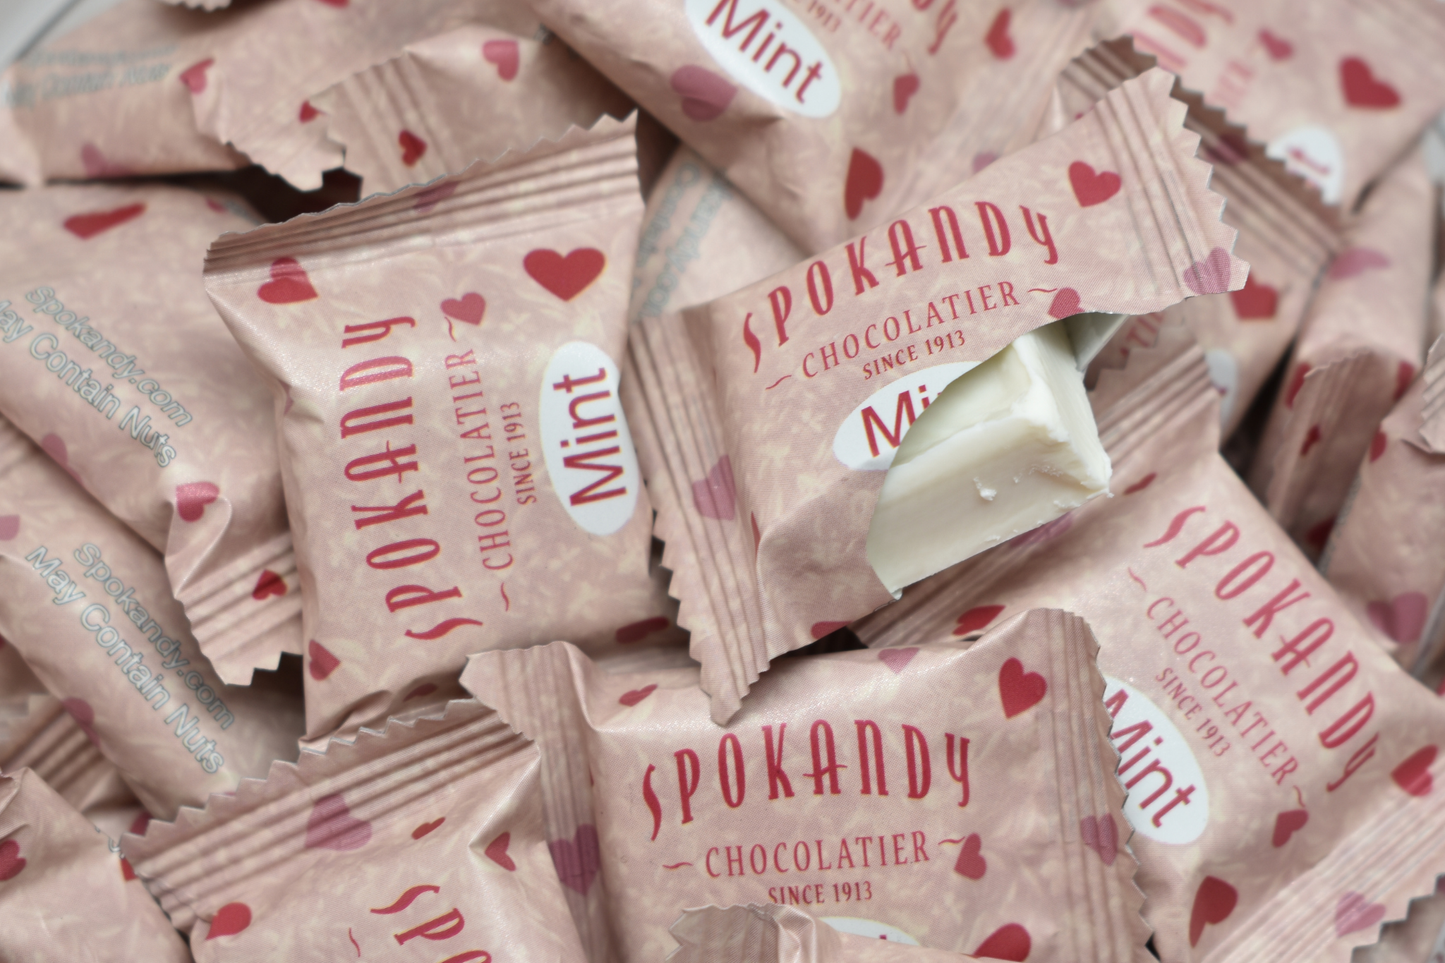 Spokandy Chocolatier - Hearts Mint